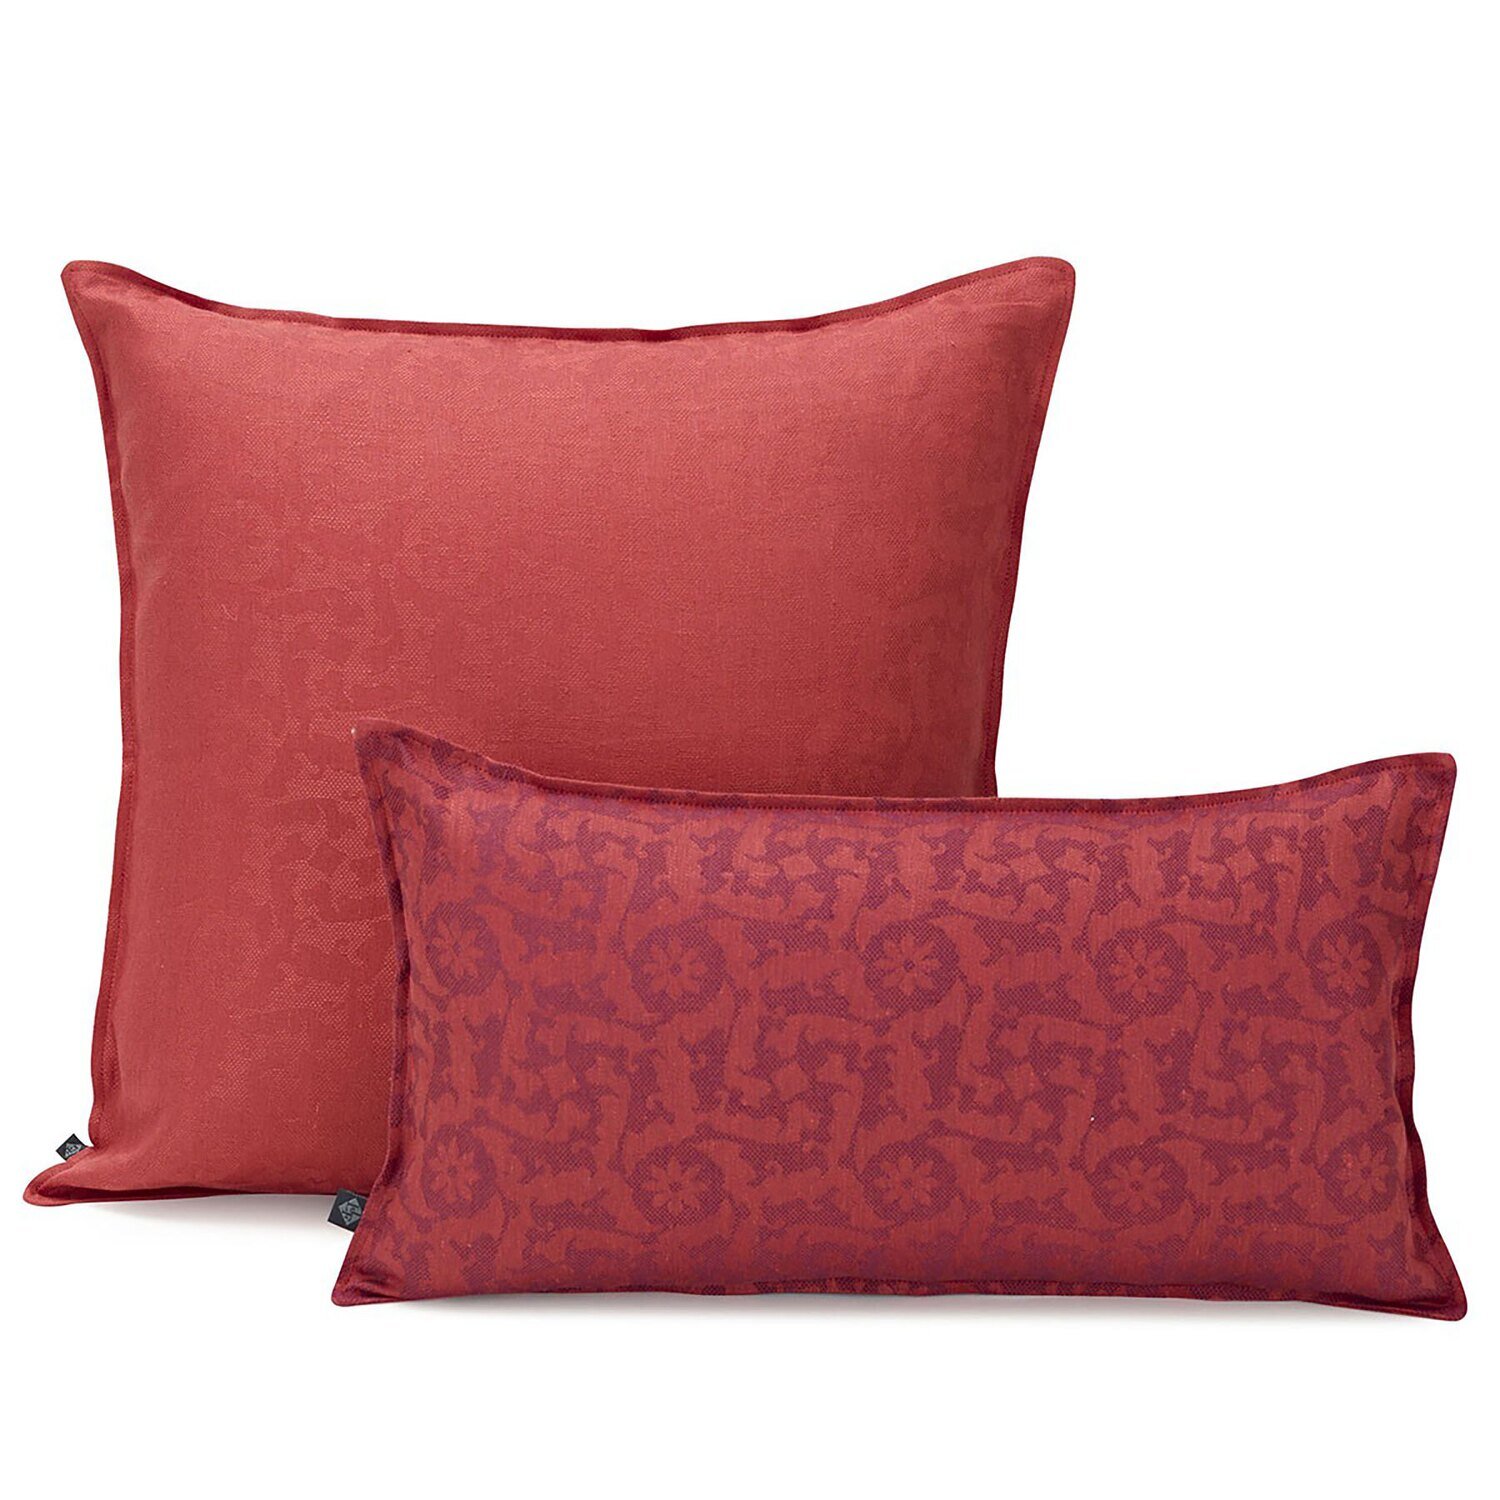 Le Jacquard Cushion Cover Ottomane Burgundy 50 x 30 100% Linen 26695